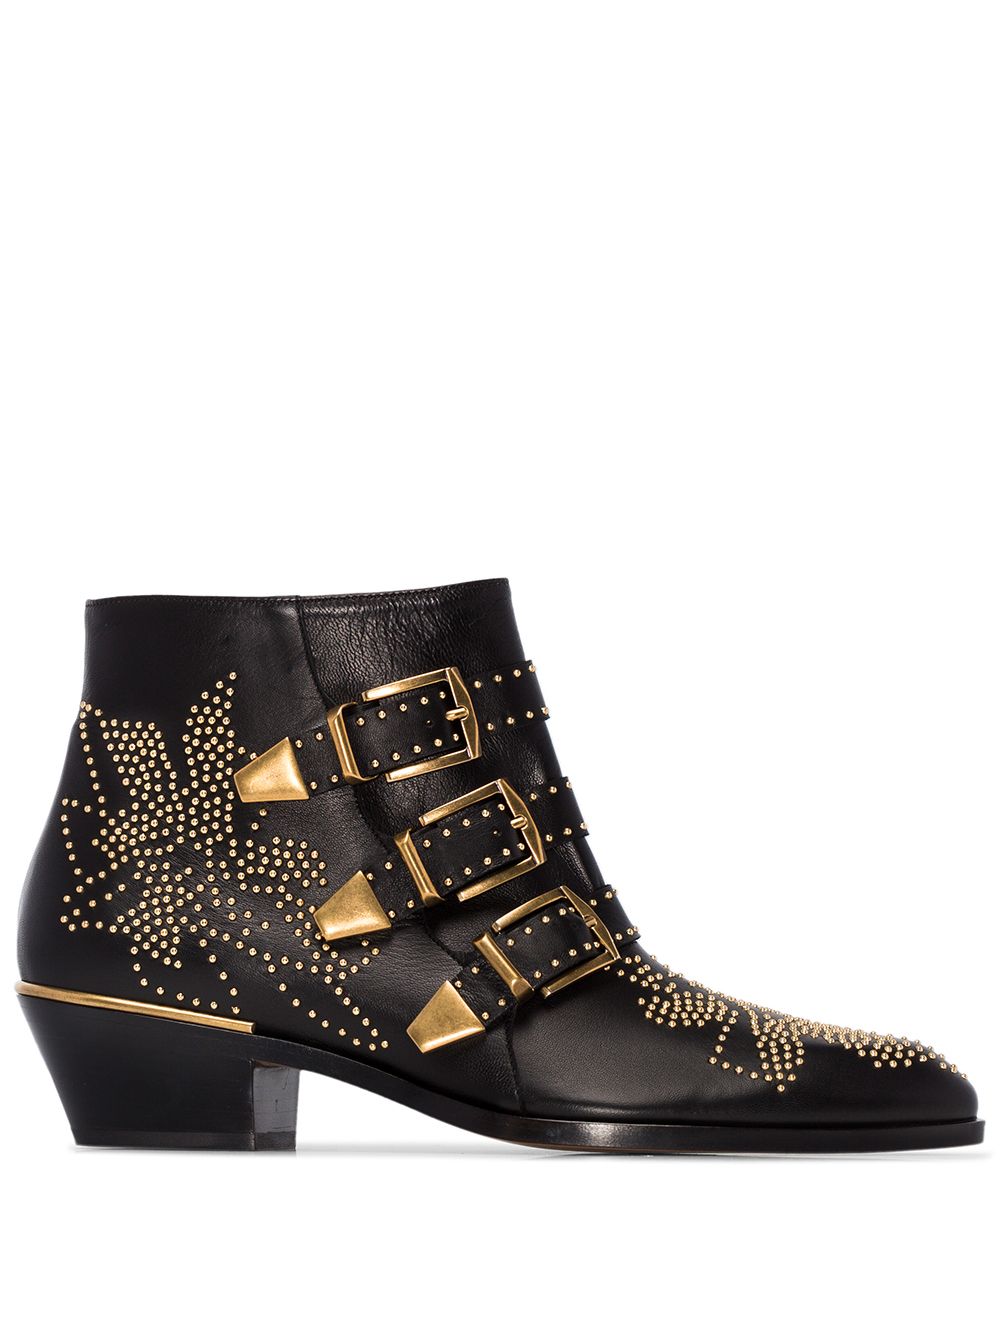 Susan Leather Boots дамски обувки ChloÉ 843246395_36